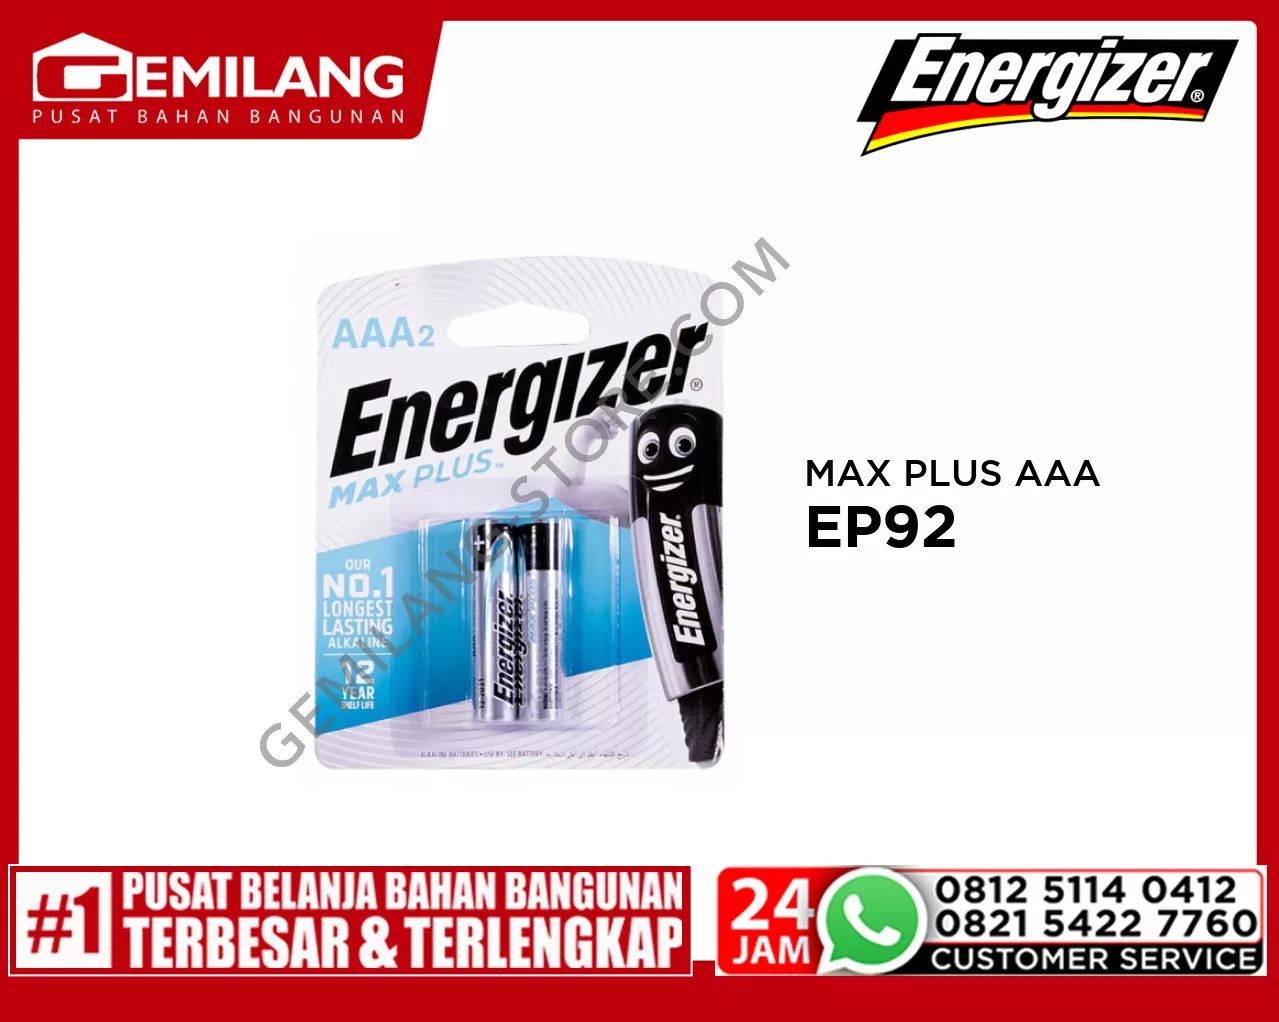 ENERGIZER MAX PLUS AAA EP92 BP2